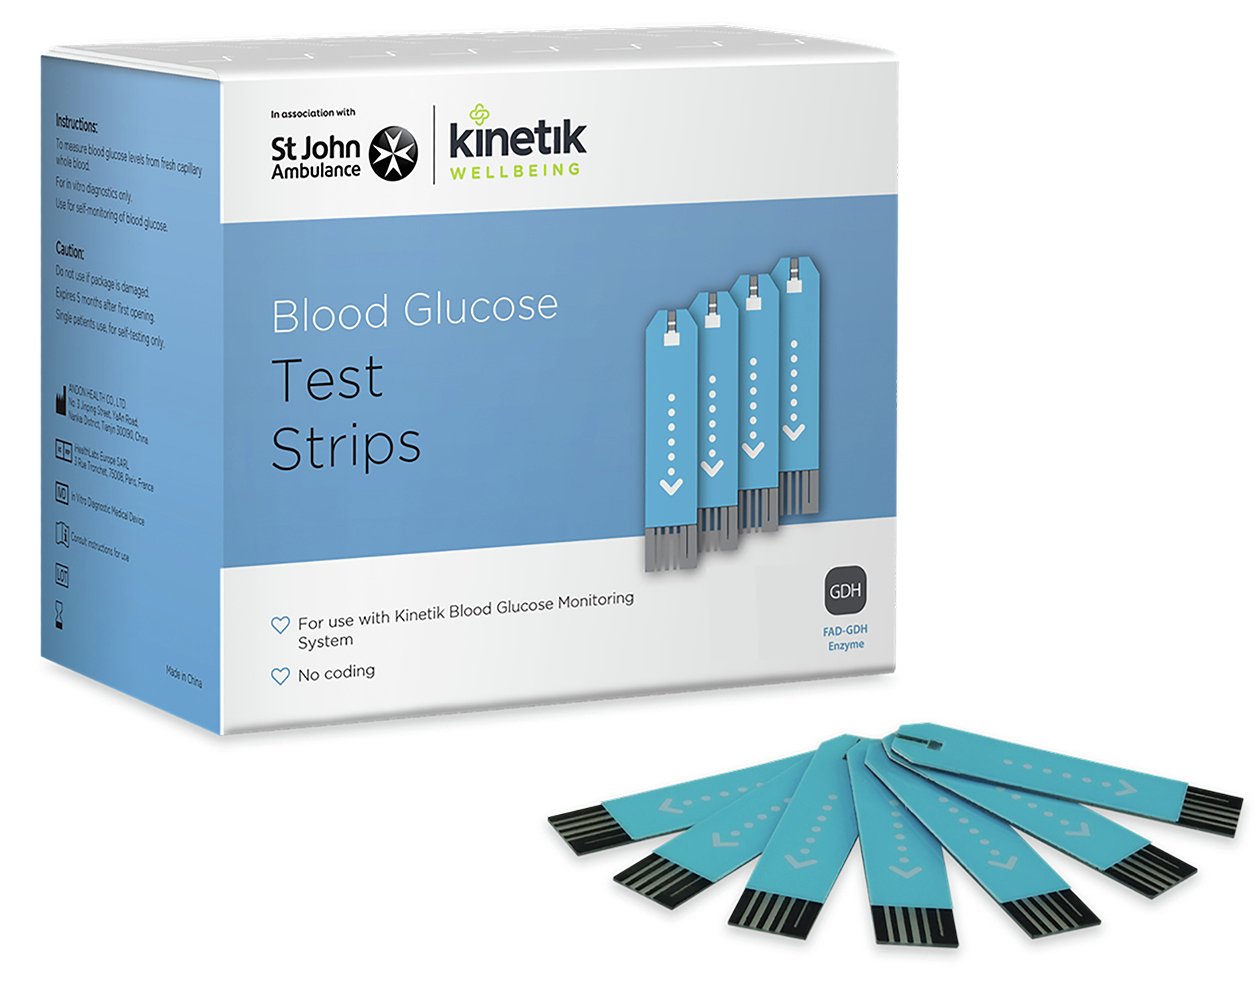 Kinetik Wellbeing Blood Glucose Test Strips - Pack of 100 